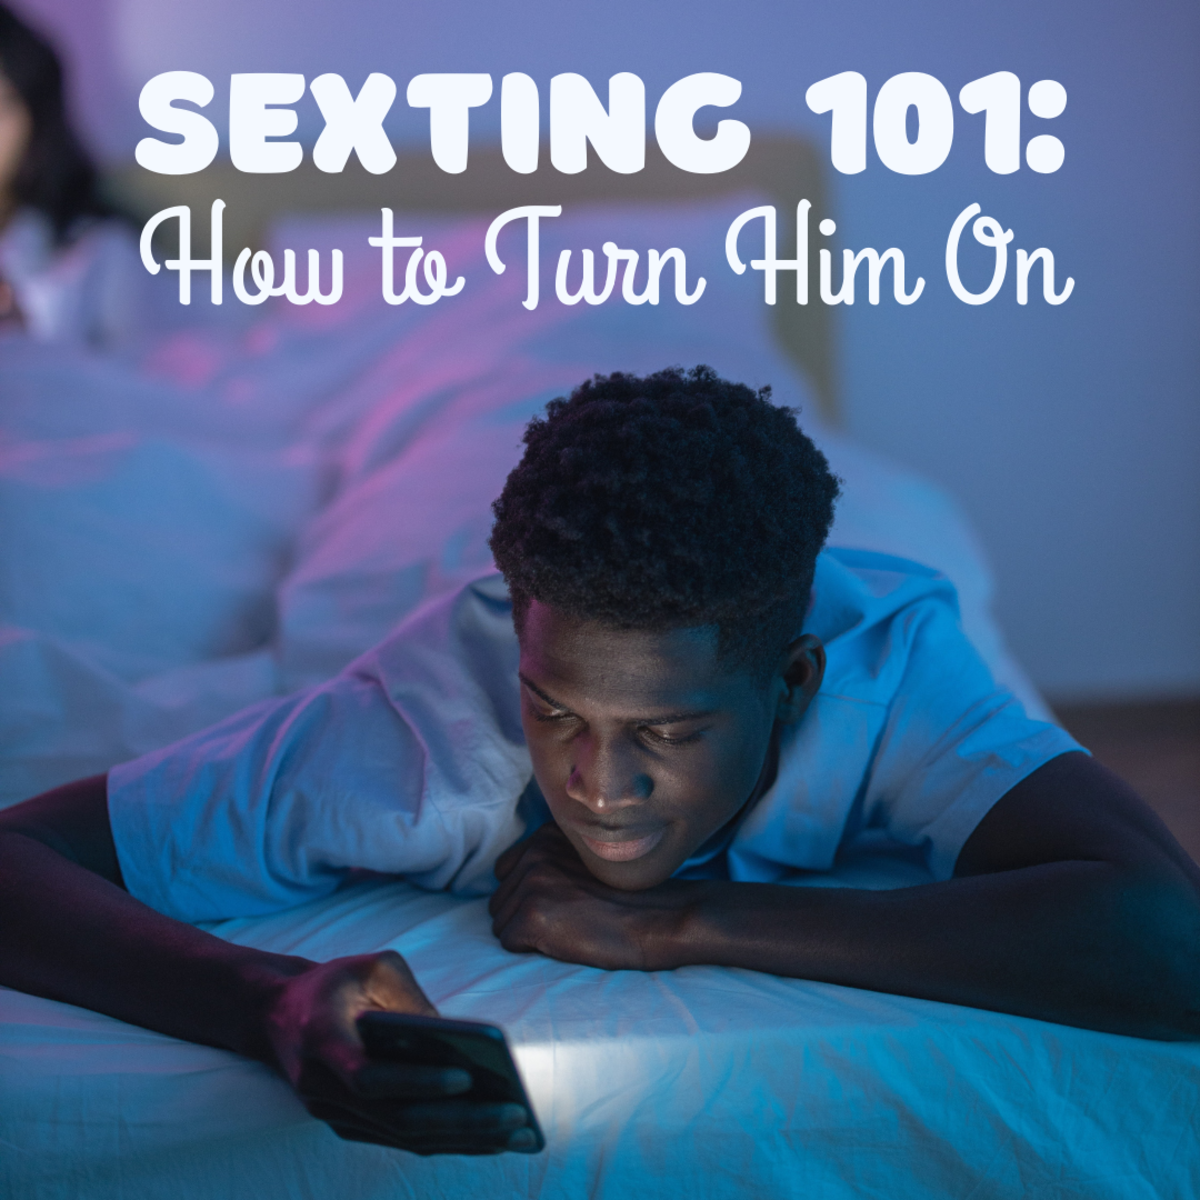 Photos boyfriend your to to sexy send 111 Sexting